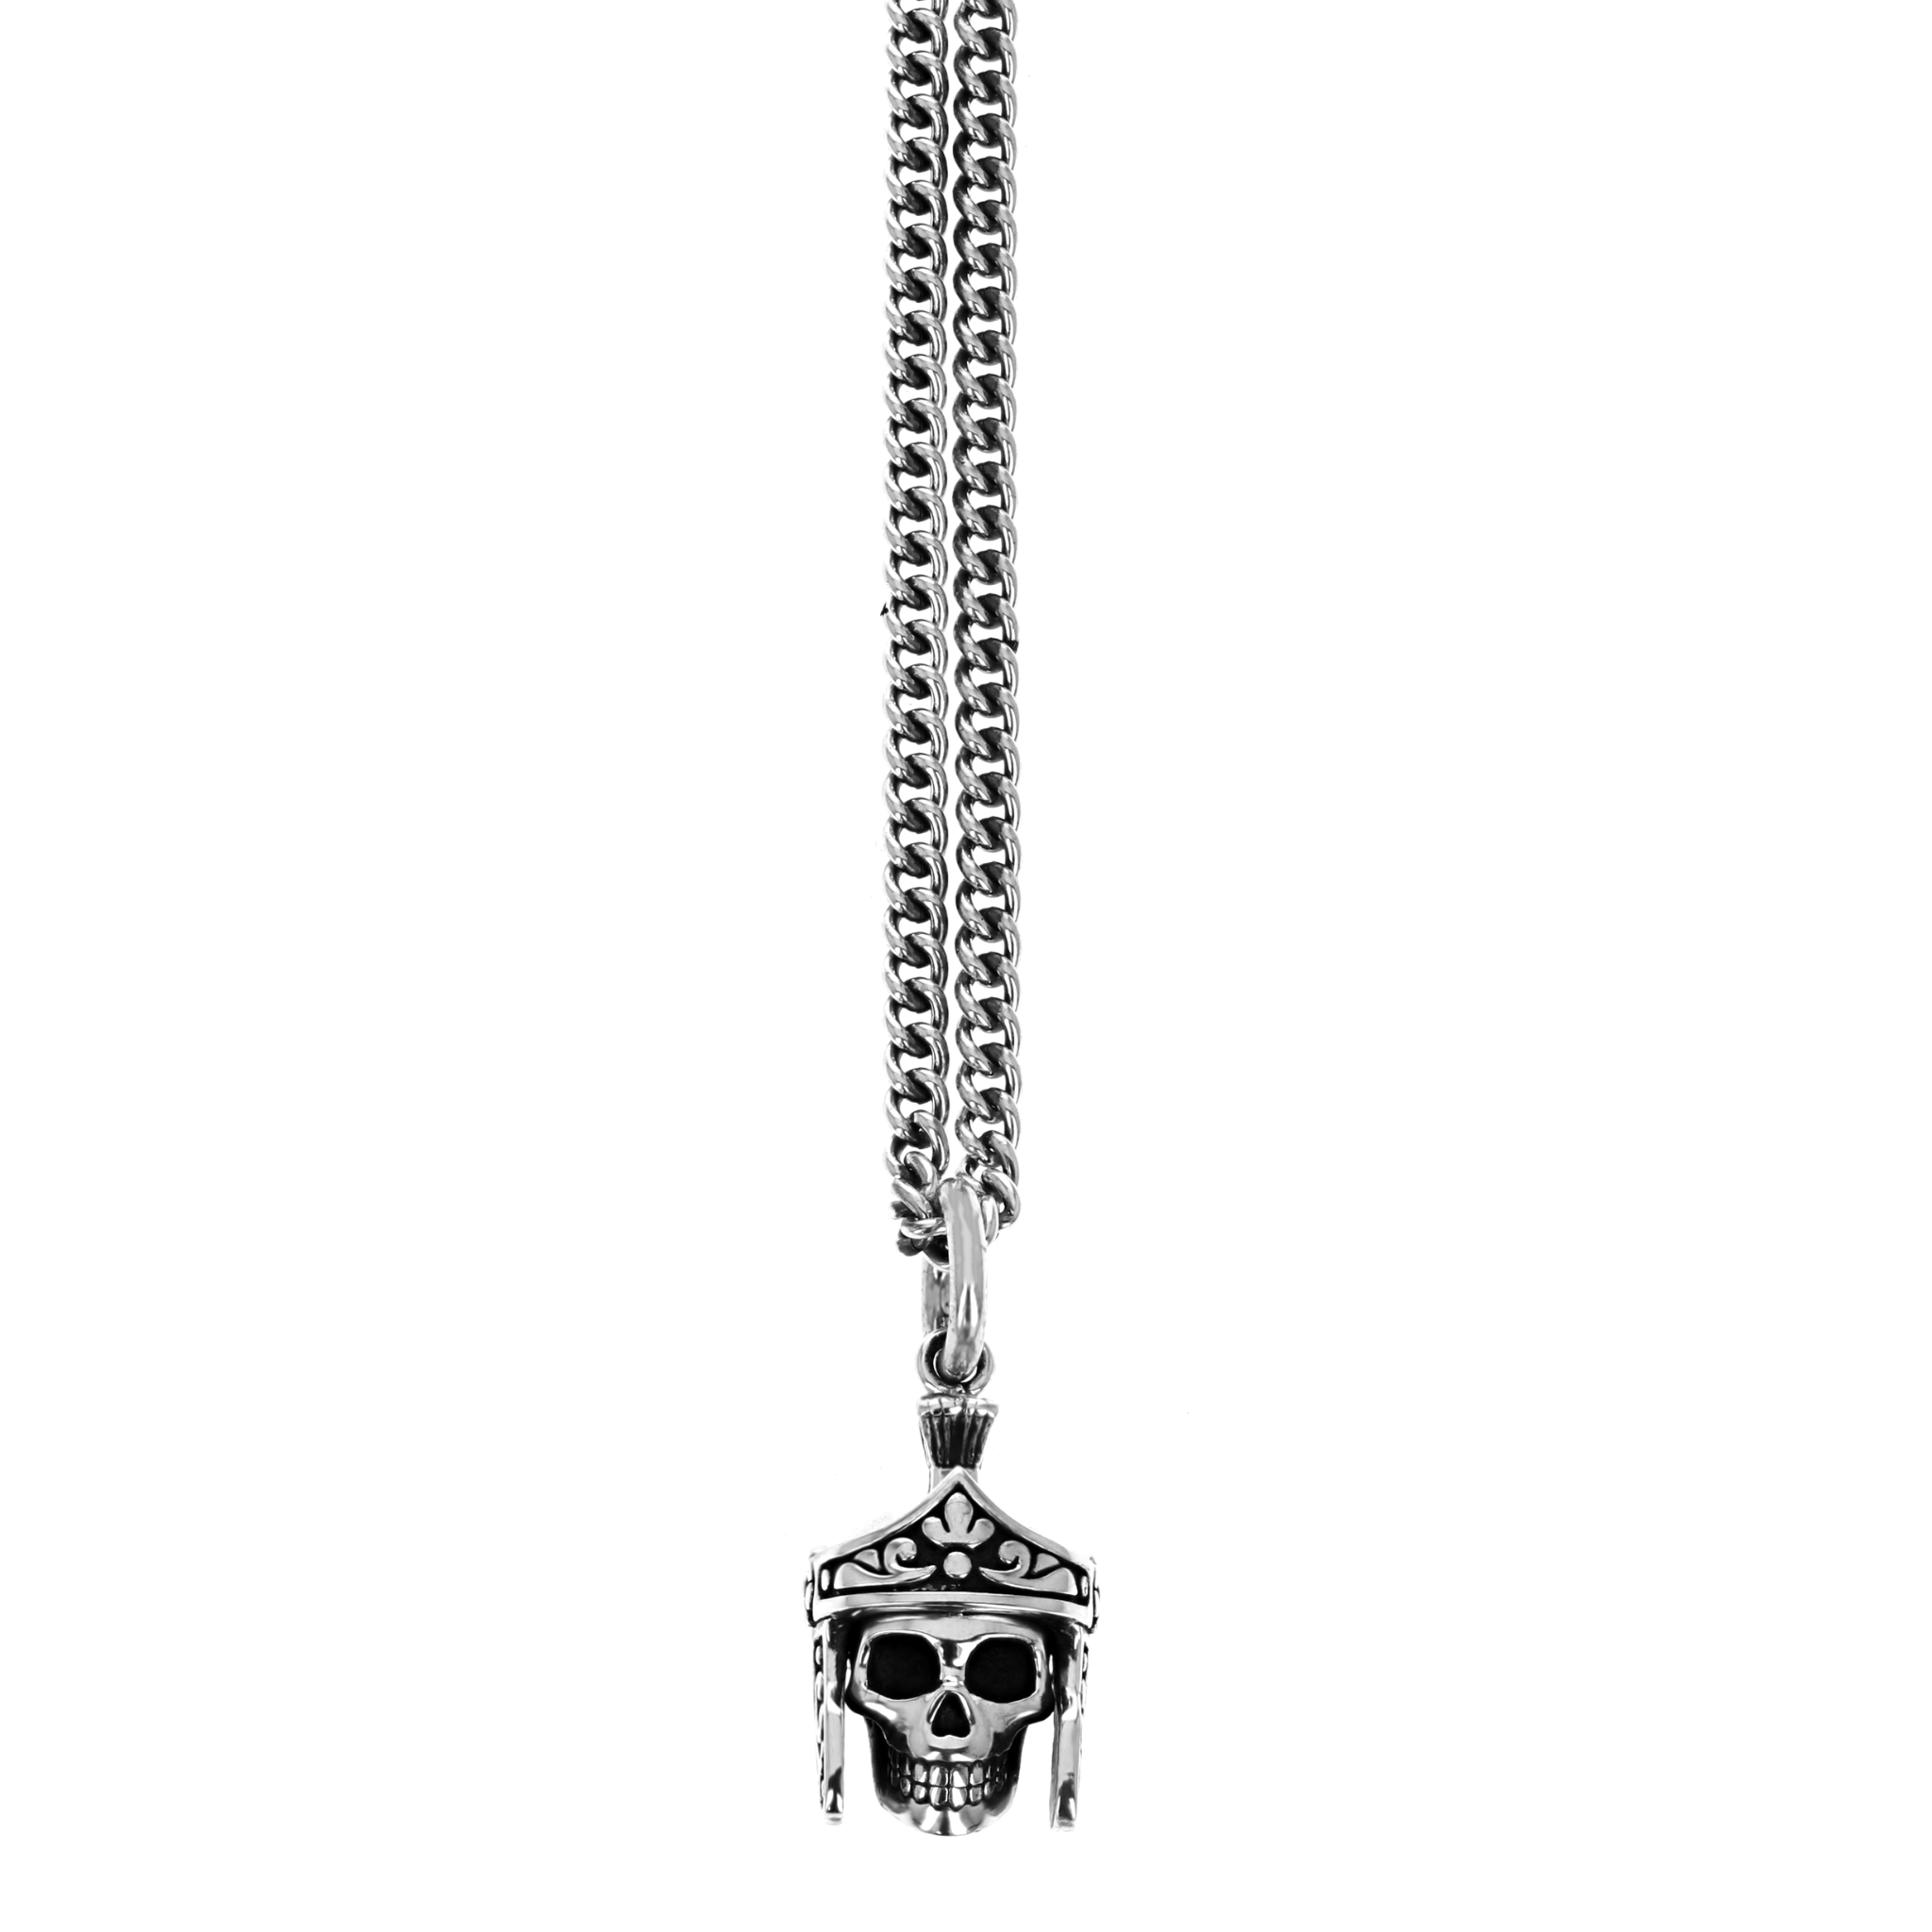 Product shot of skull pendant with gladiator helmet on